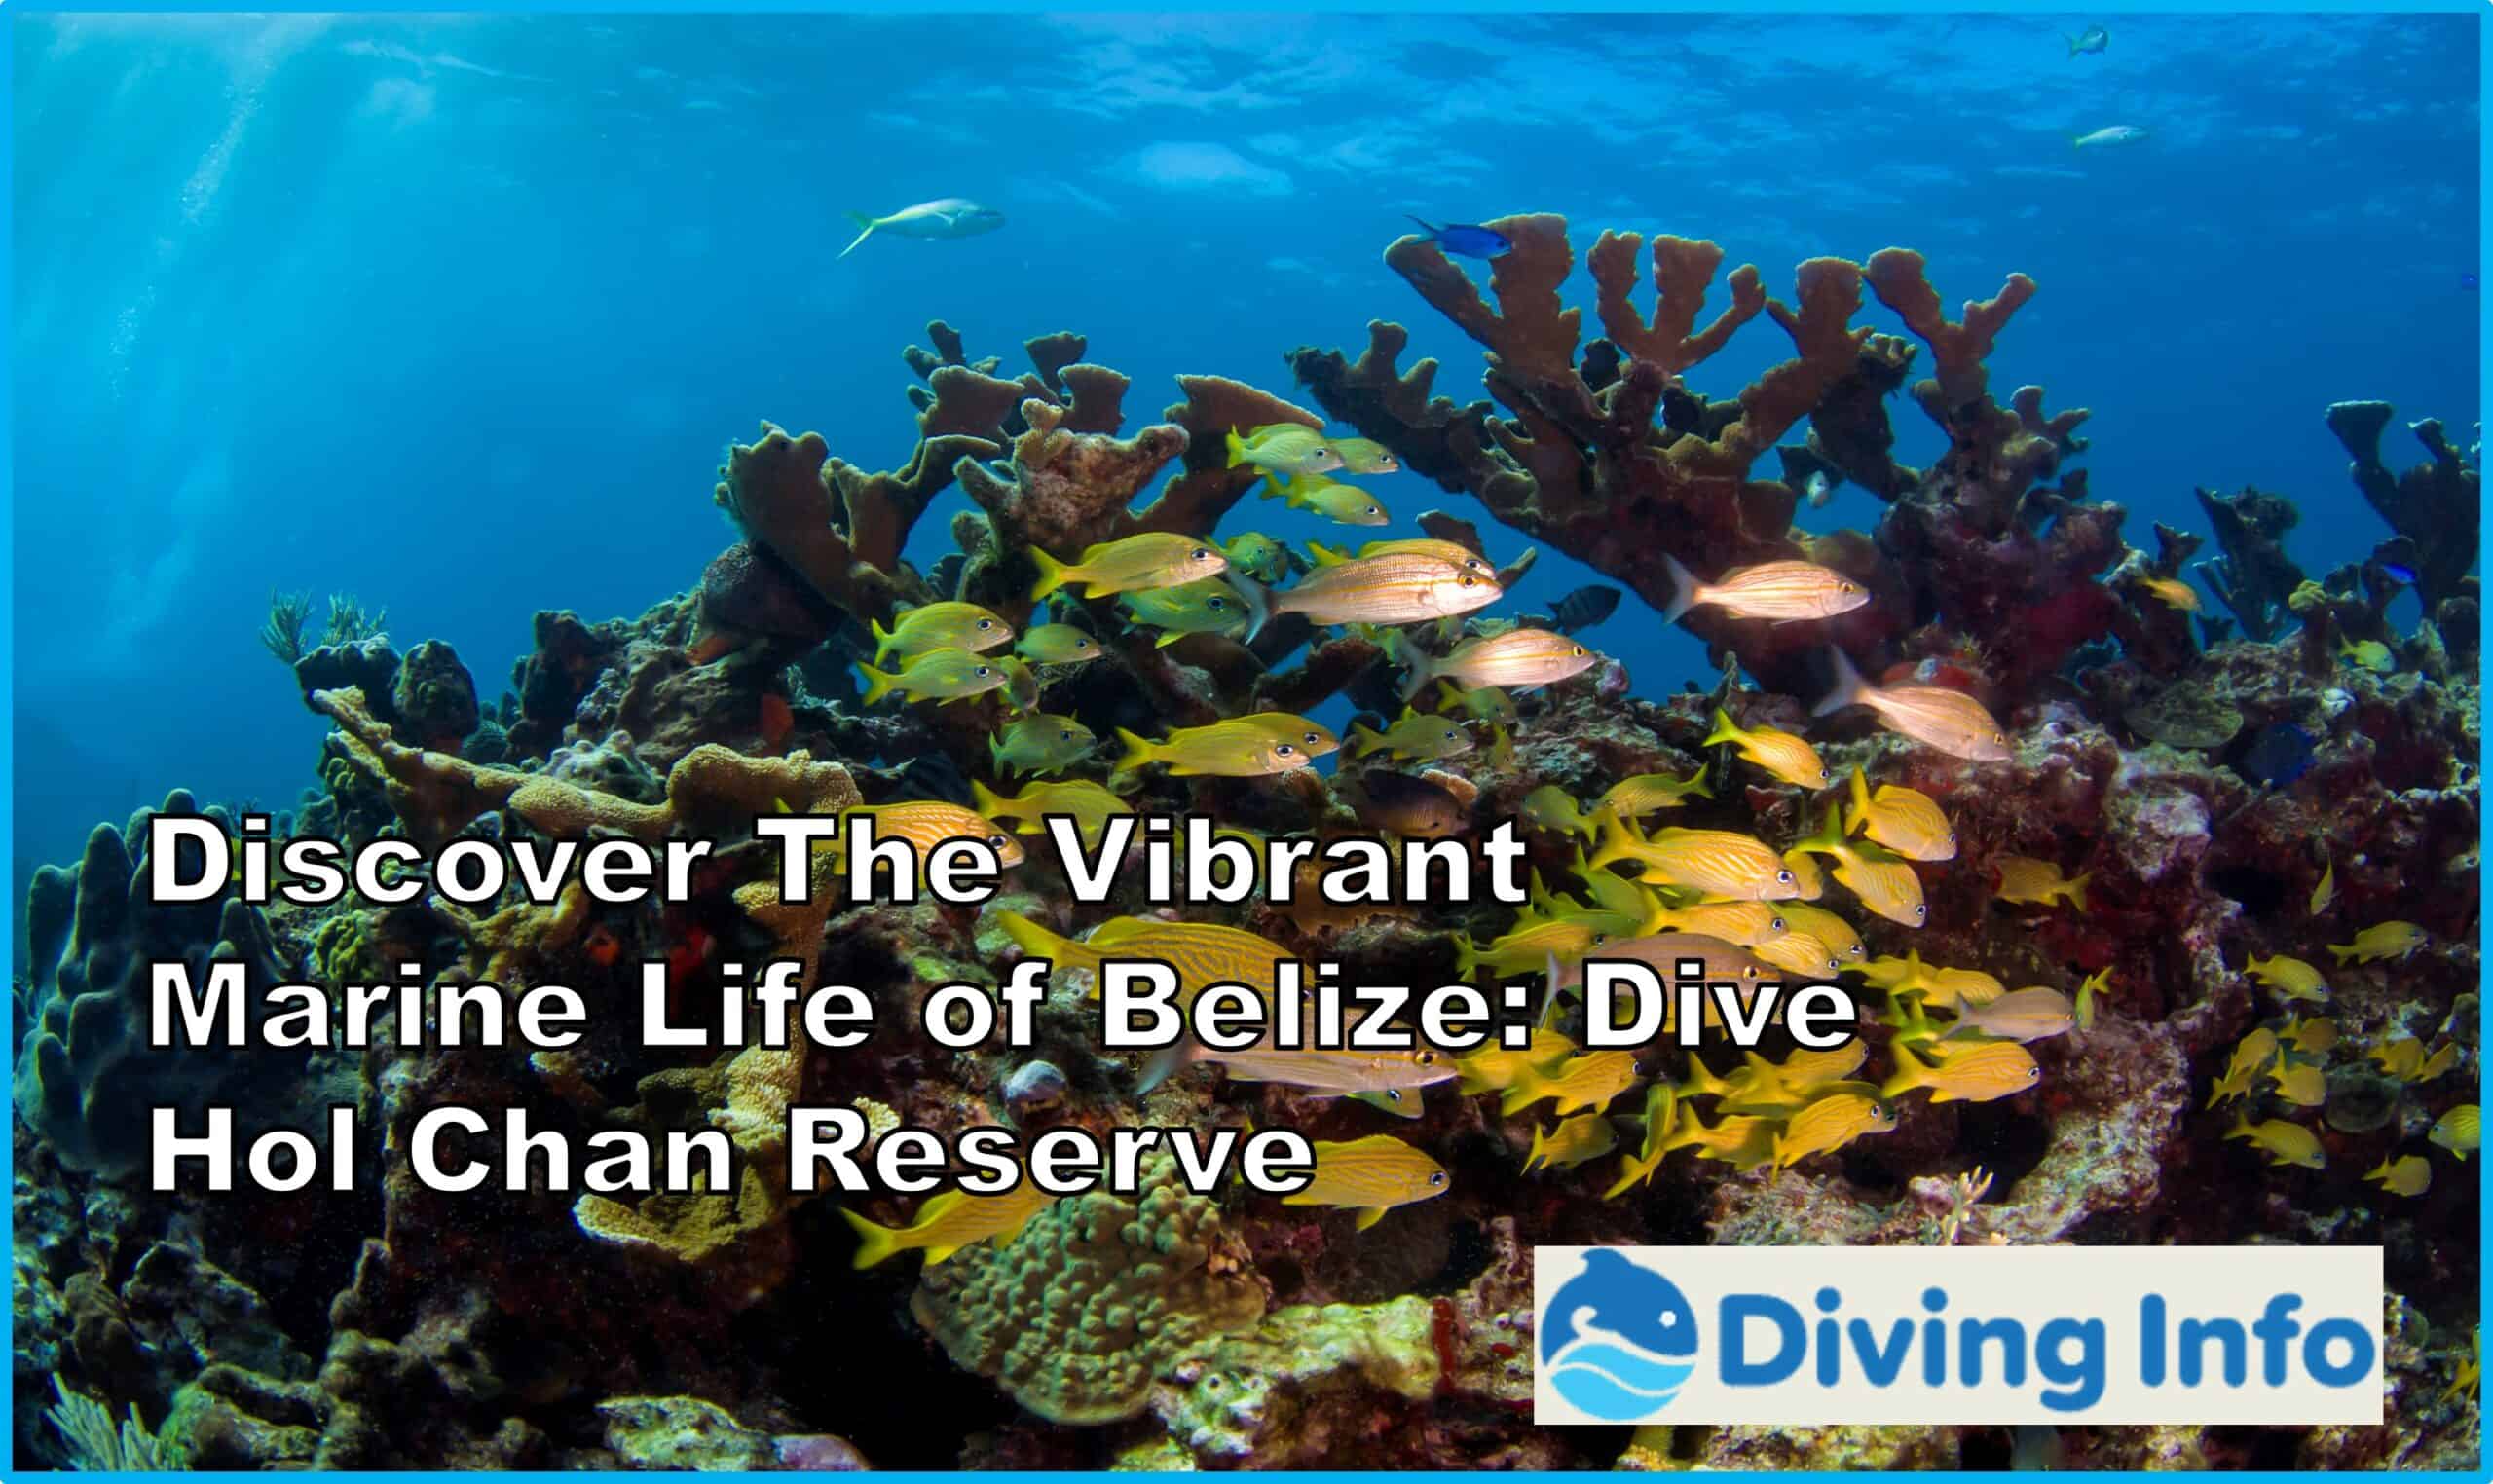 Dive Hol Chan Reserve